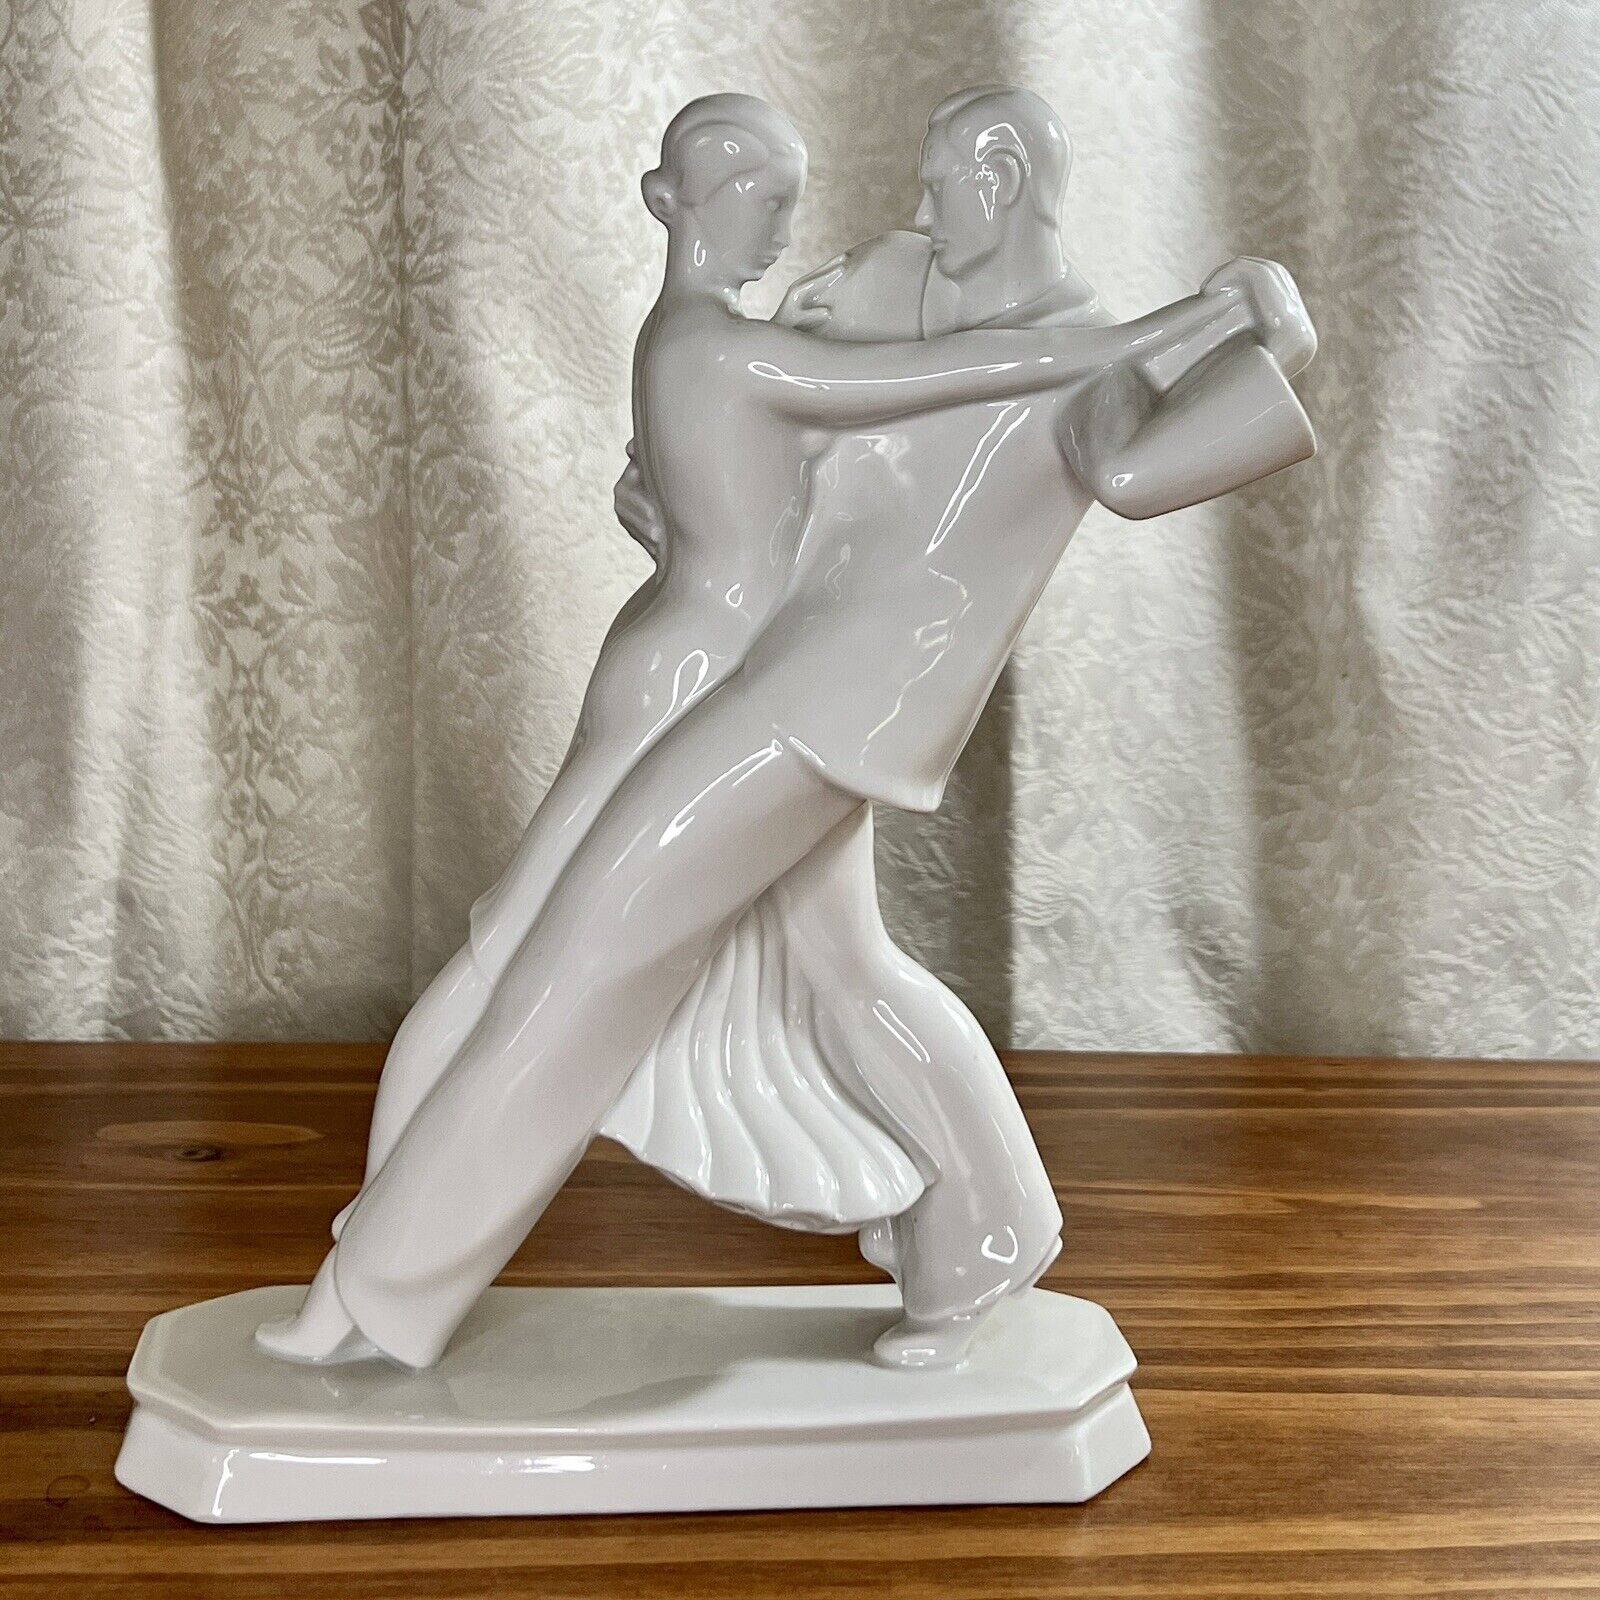 RARE 1930’s Rosenthal Germany “Dancing Pair” Man And Woman Art Deco Figurine